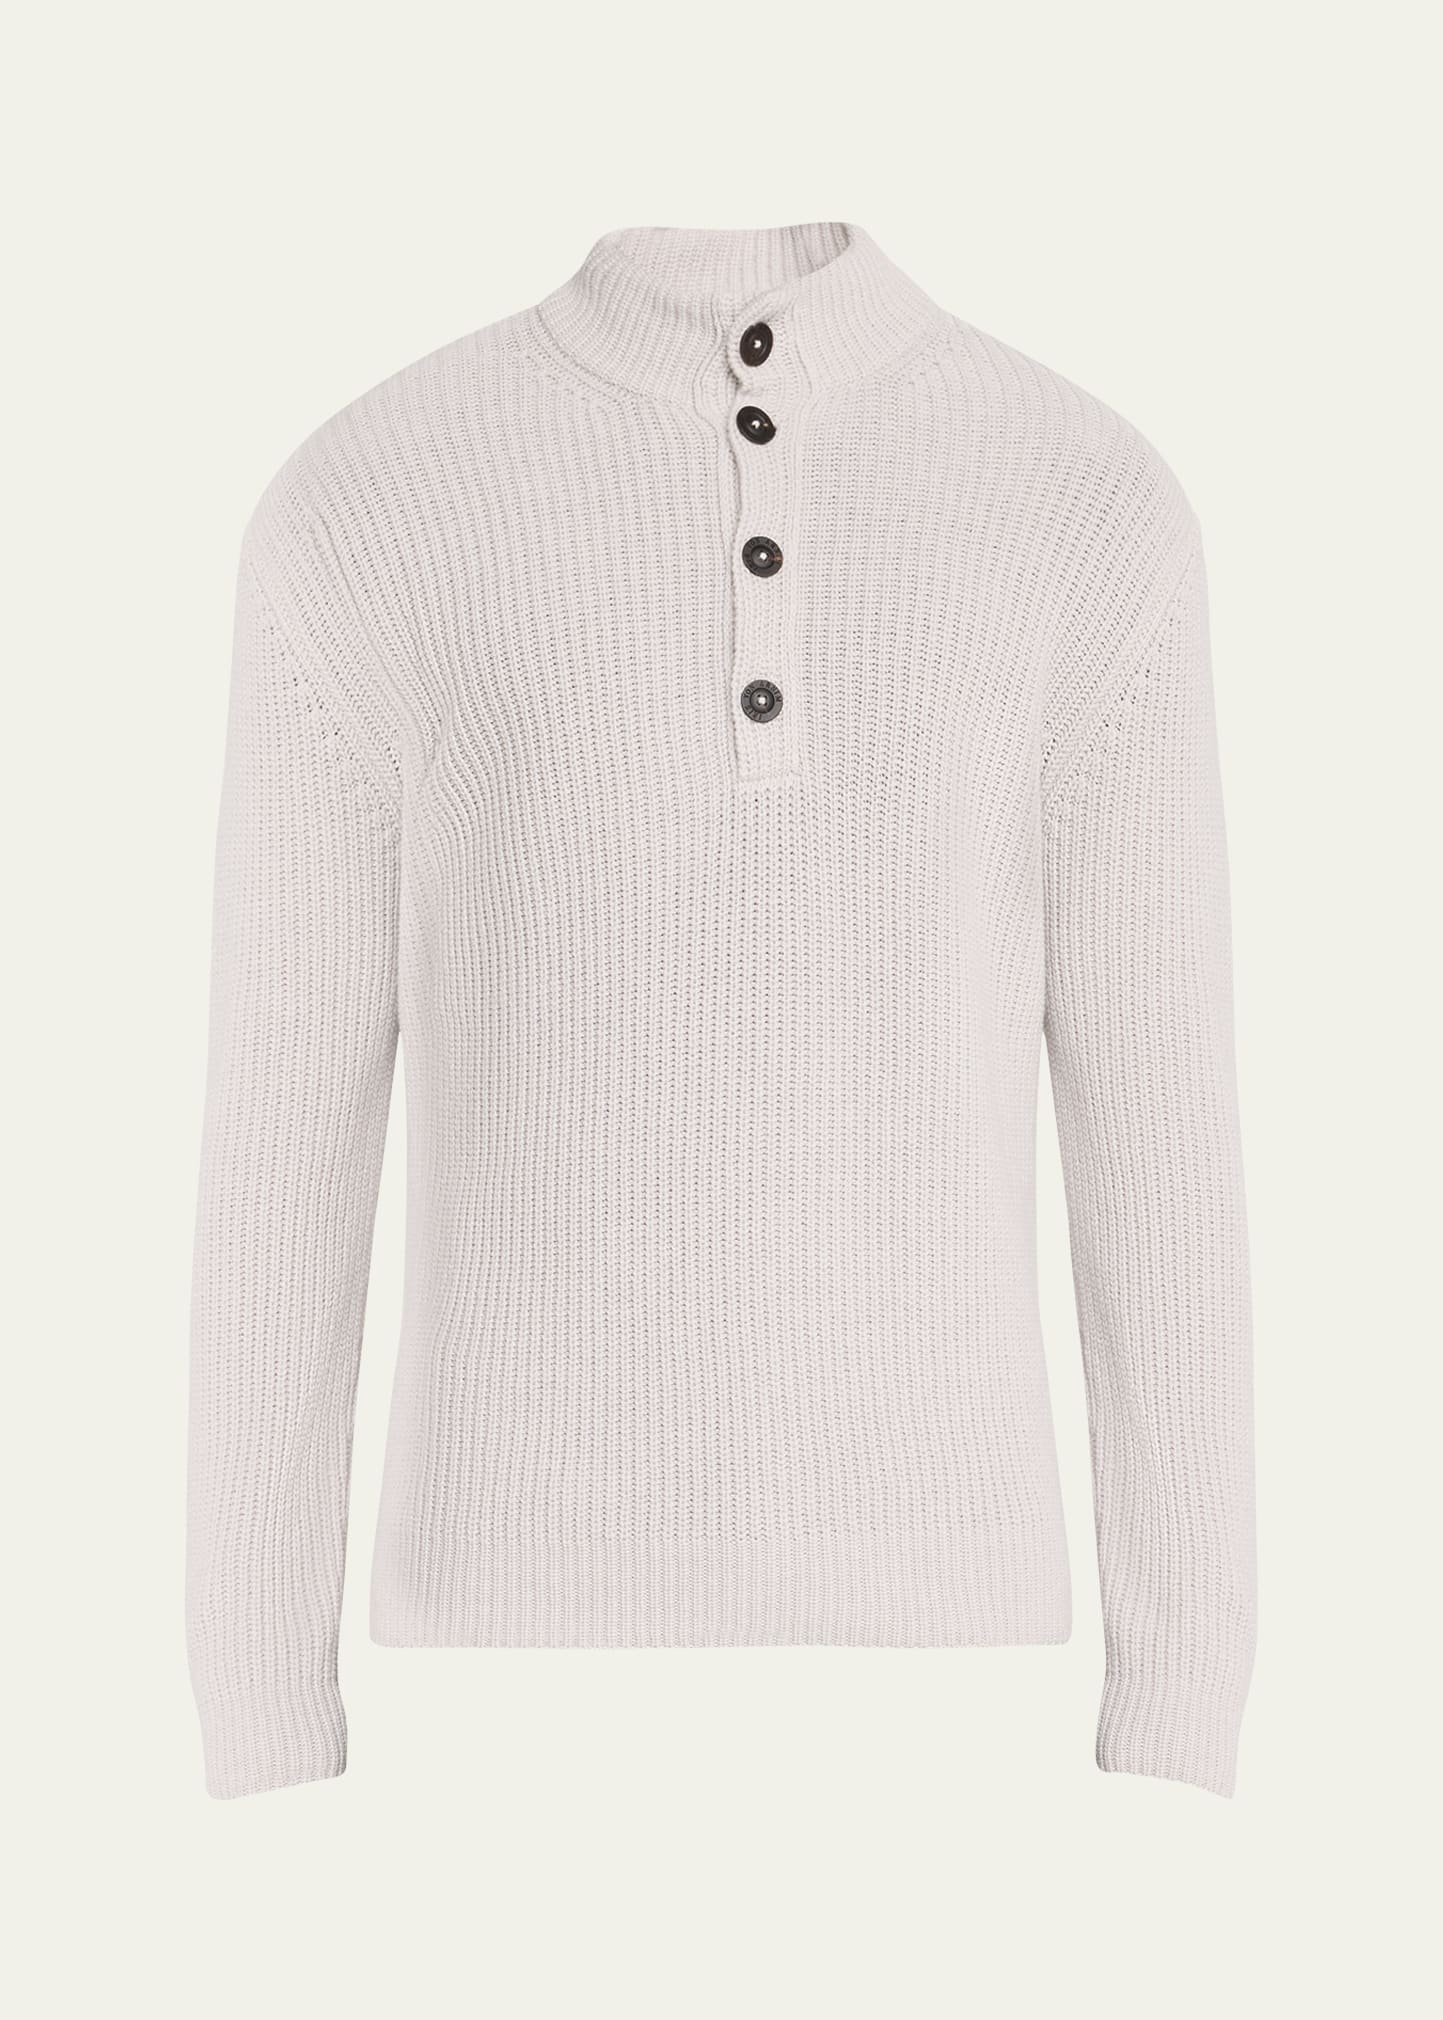 Men's Cashmere Four-Button Pullover Sweater